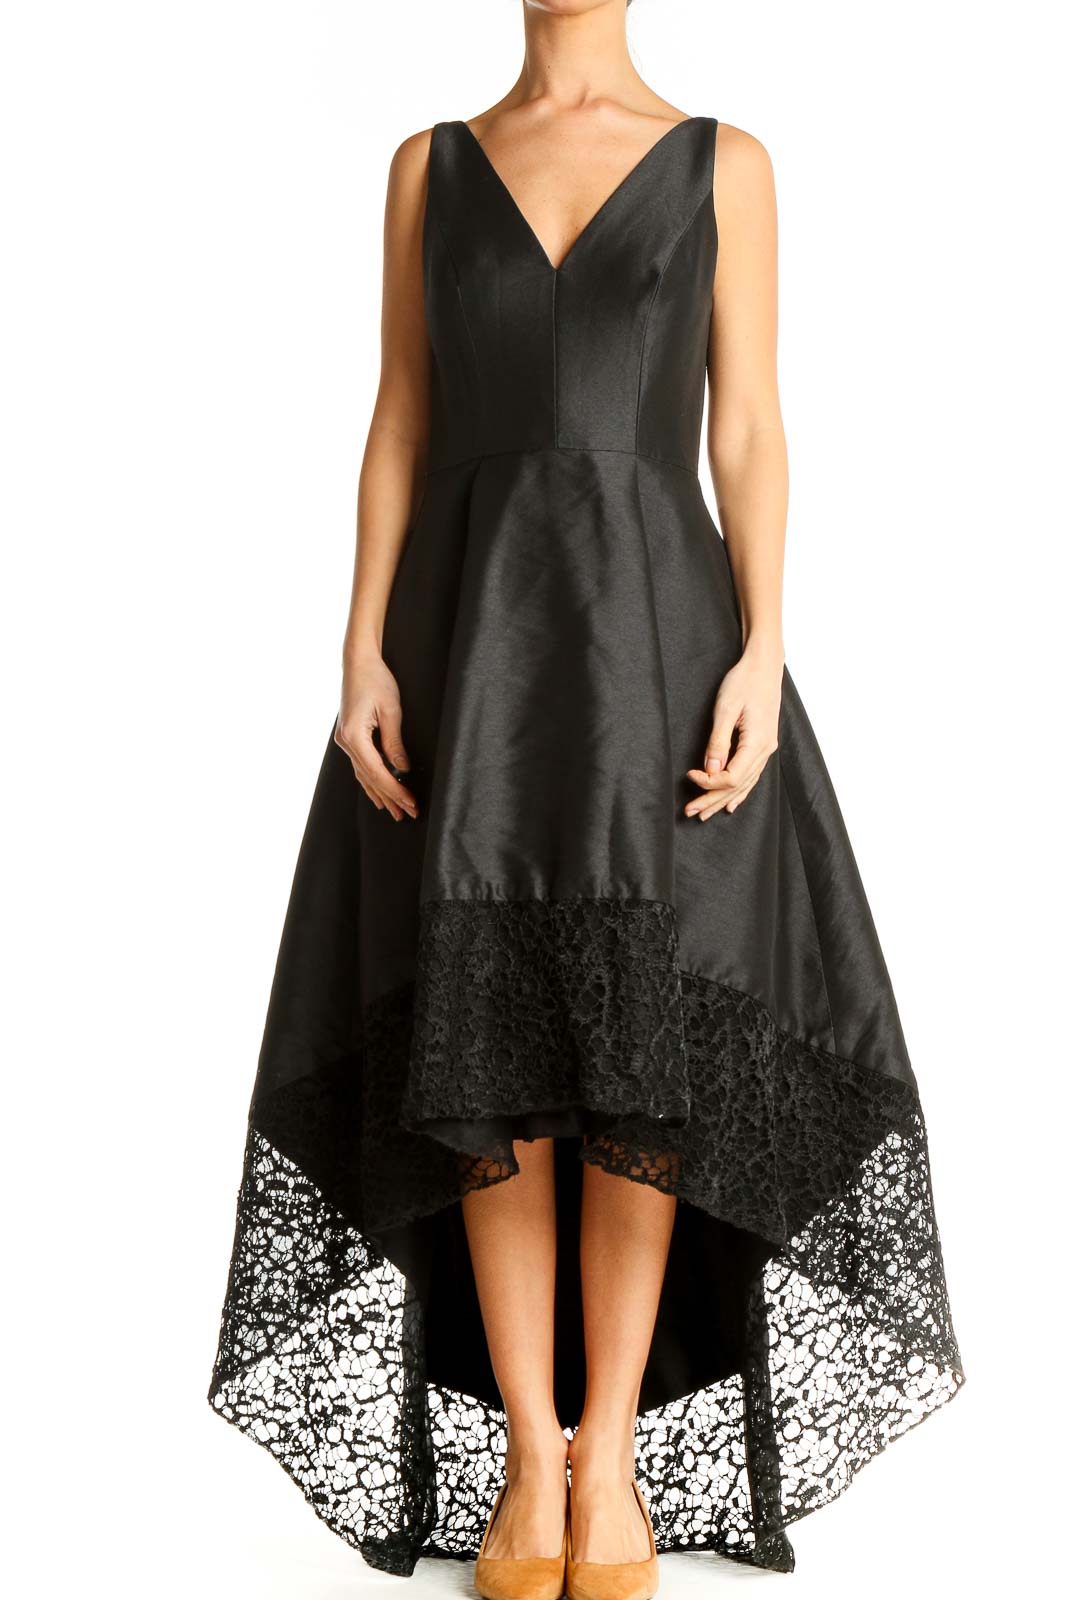 Black Lace Fancy High-Low Dress Front